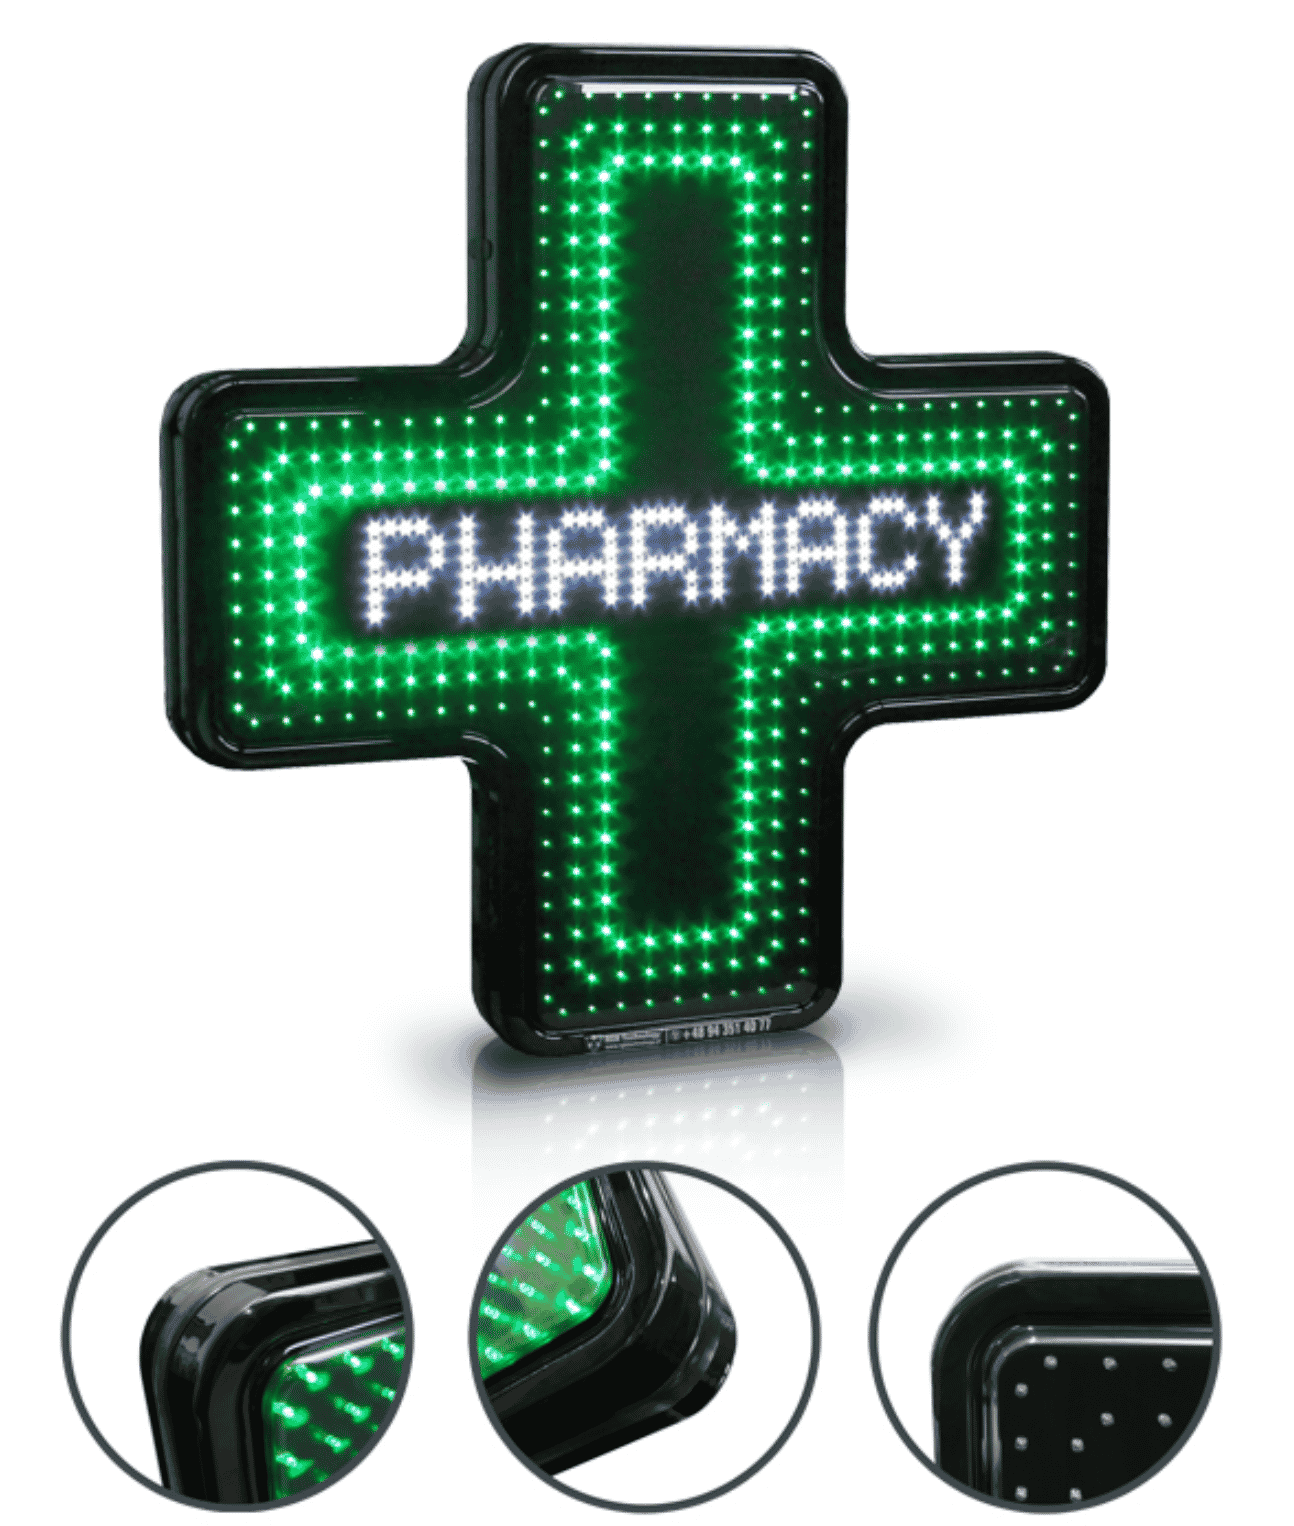 Pharmacy Crosses